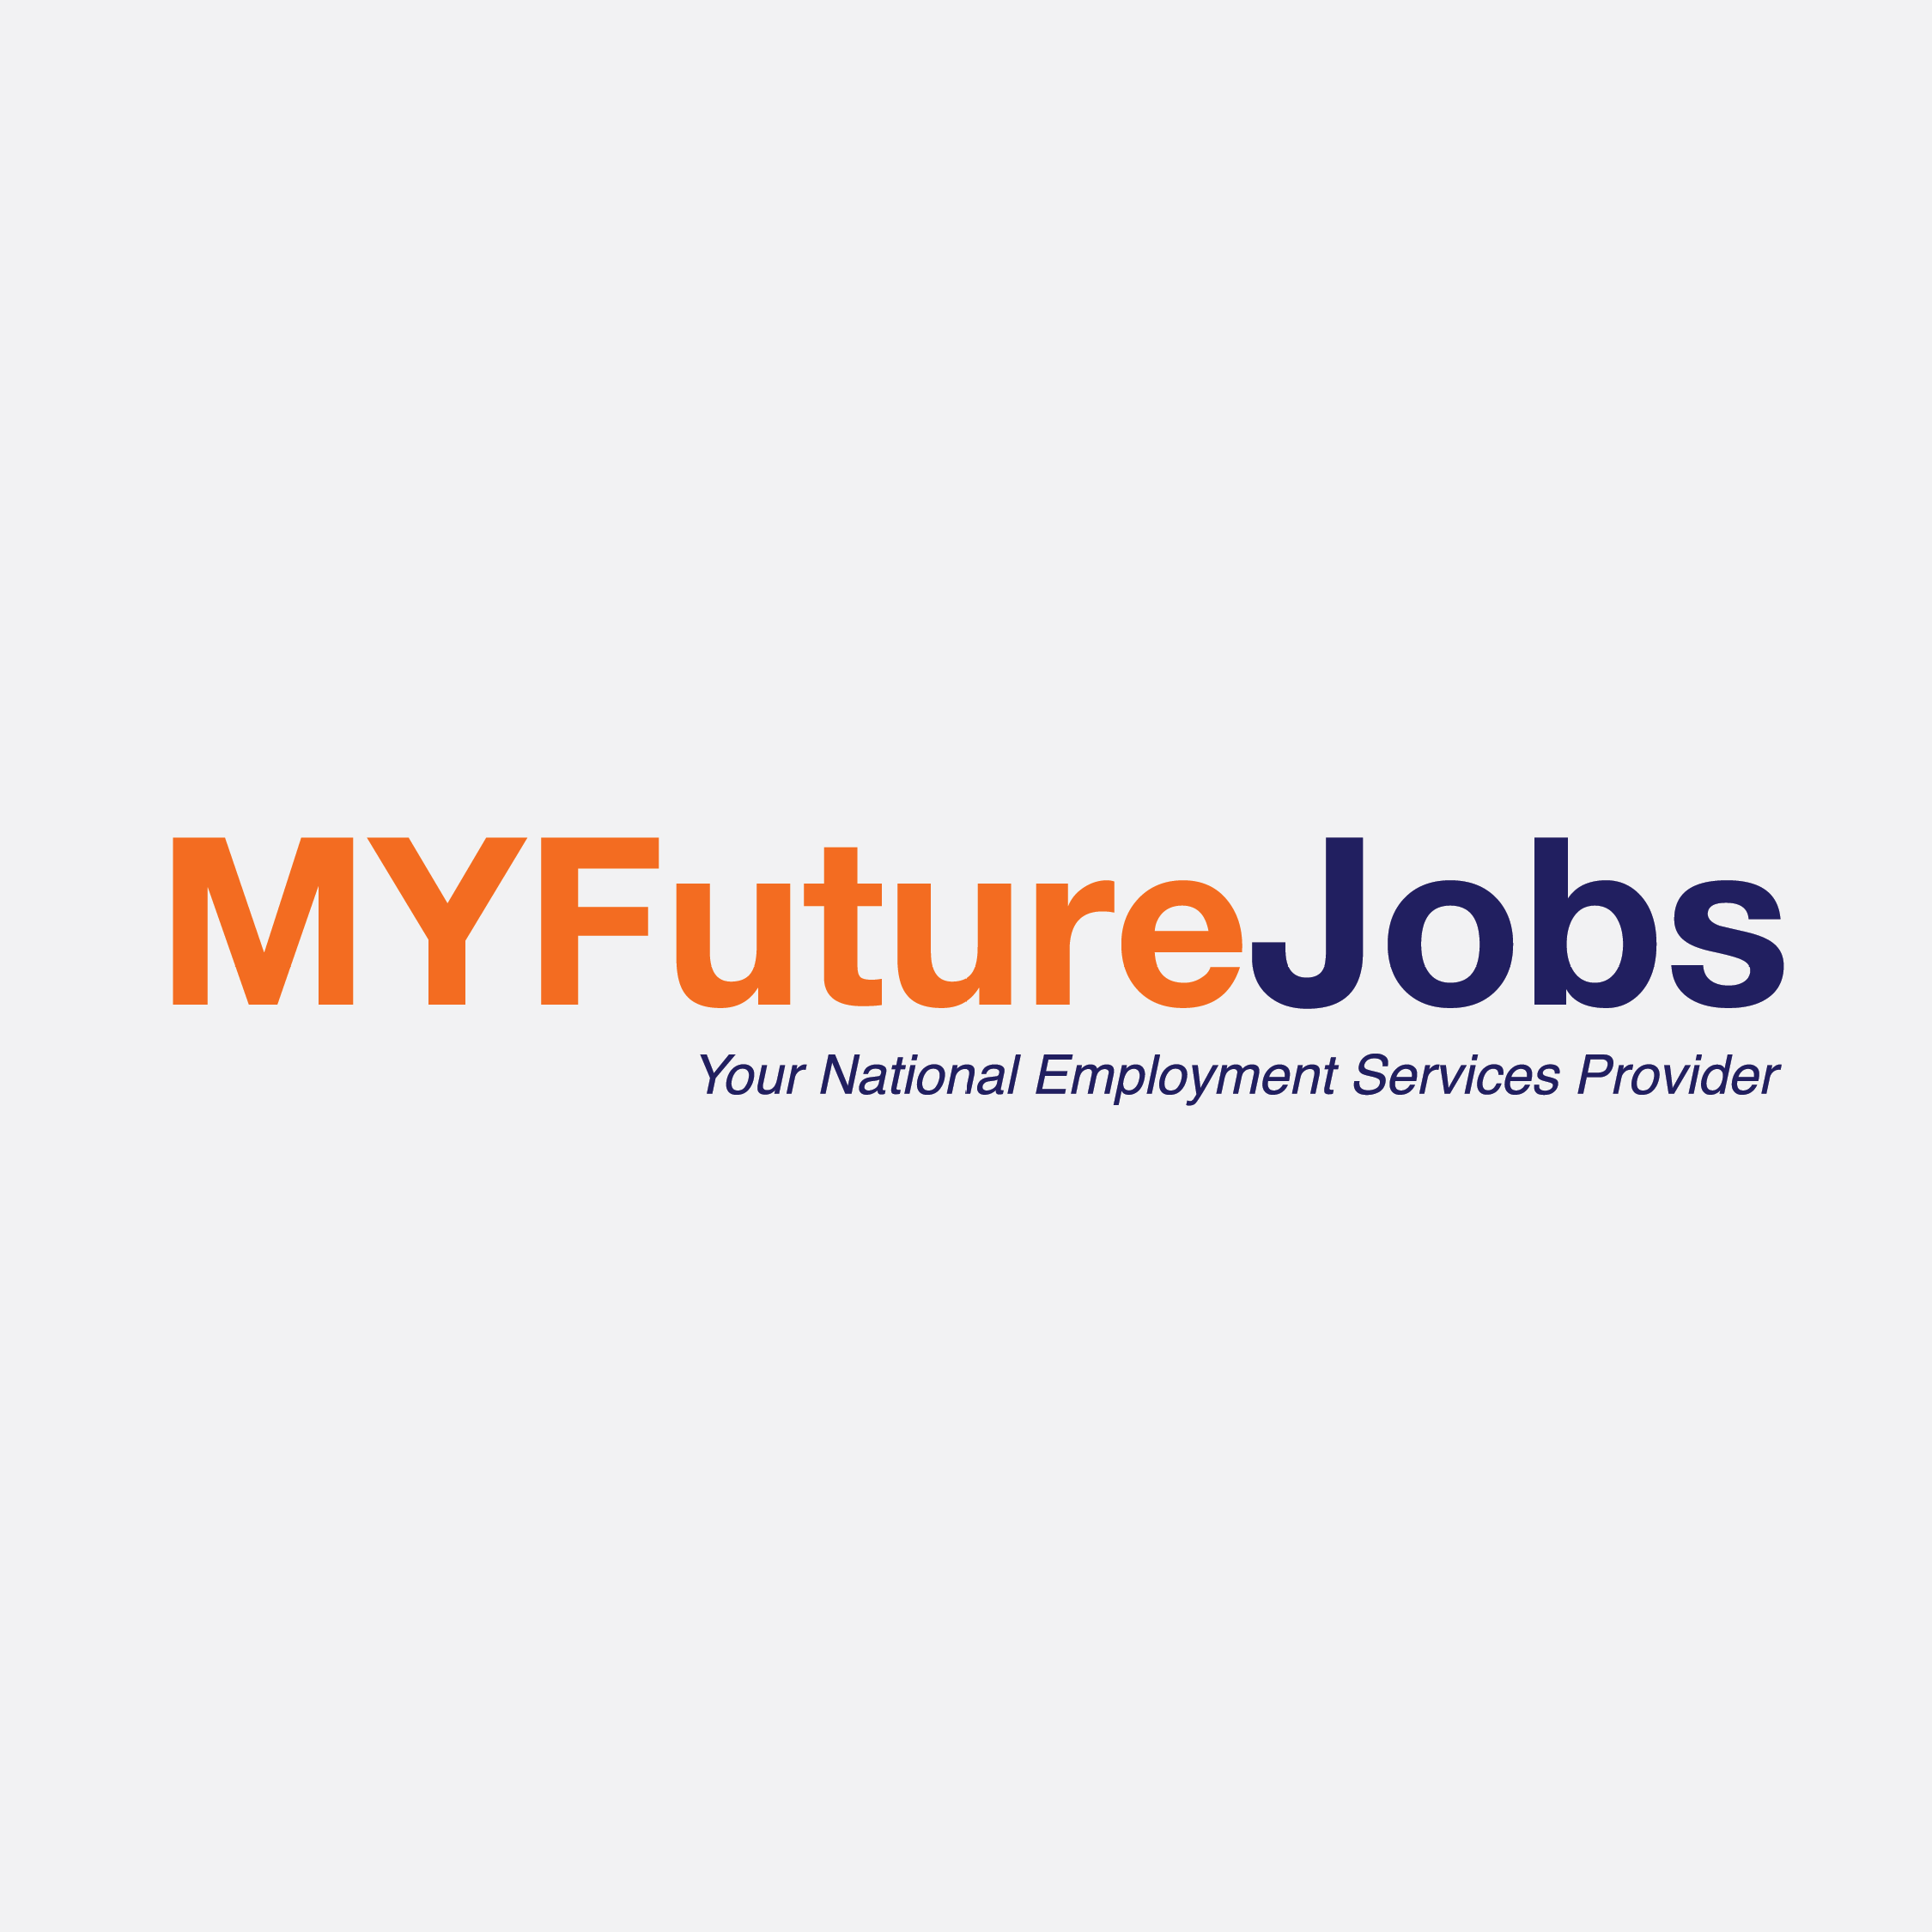 jobs in Peps-jv (m) Sdn Bhd